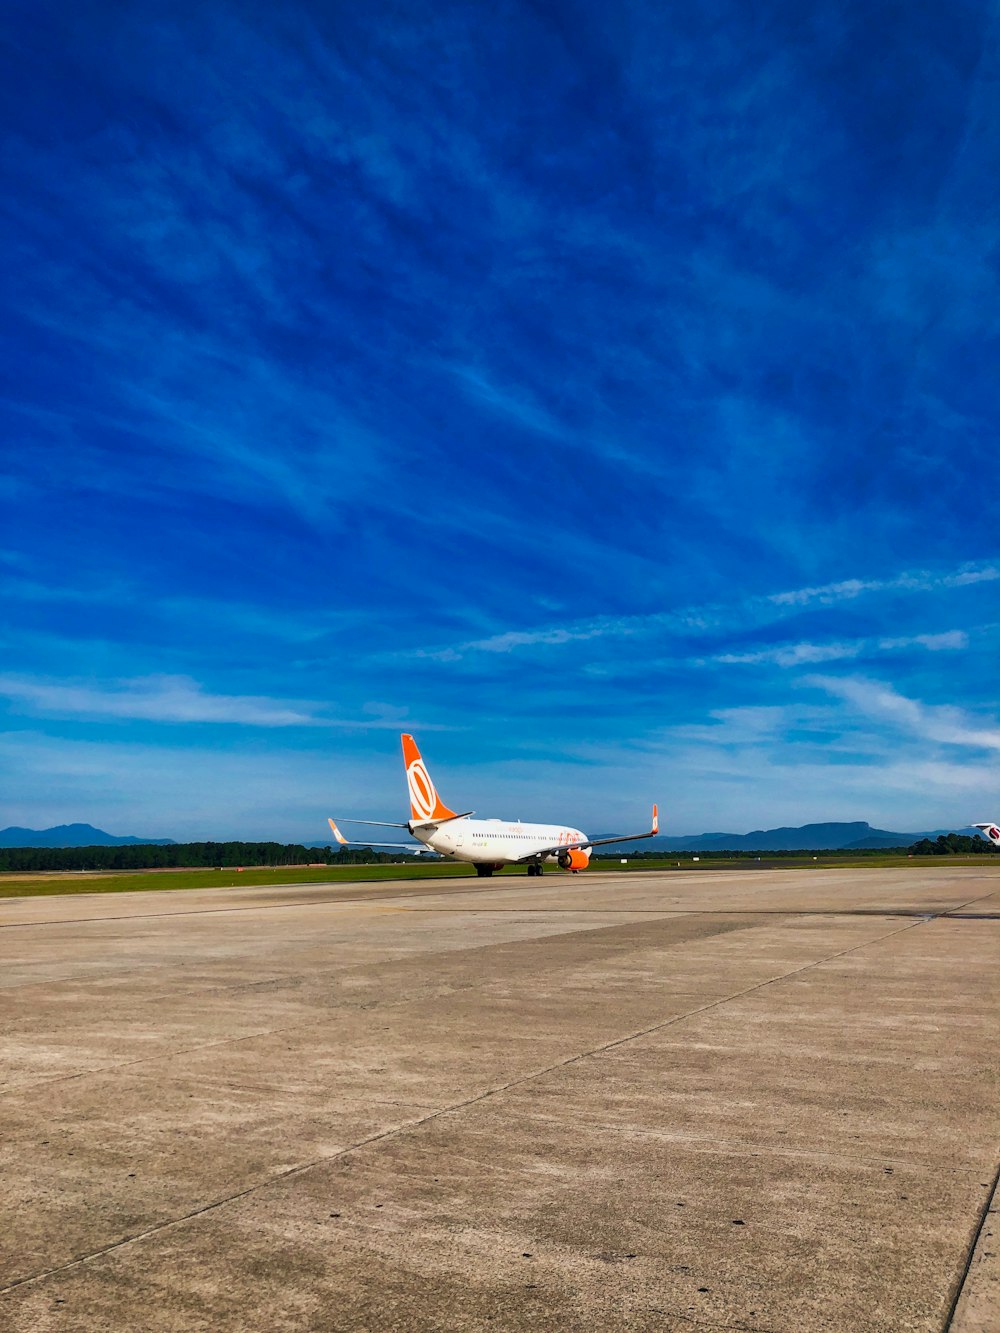 white and orange passenger airplane landing under blue and white sky